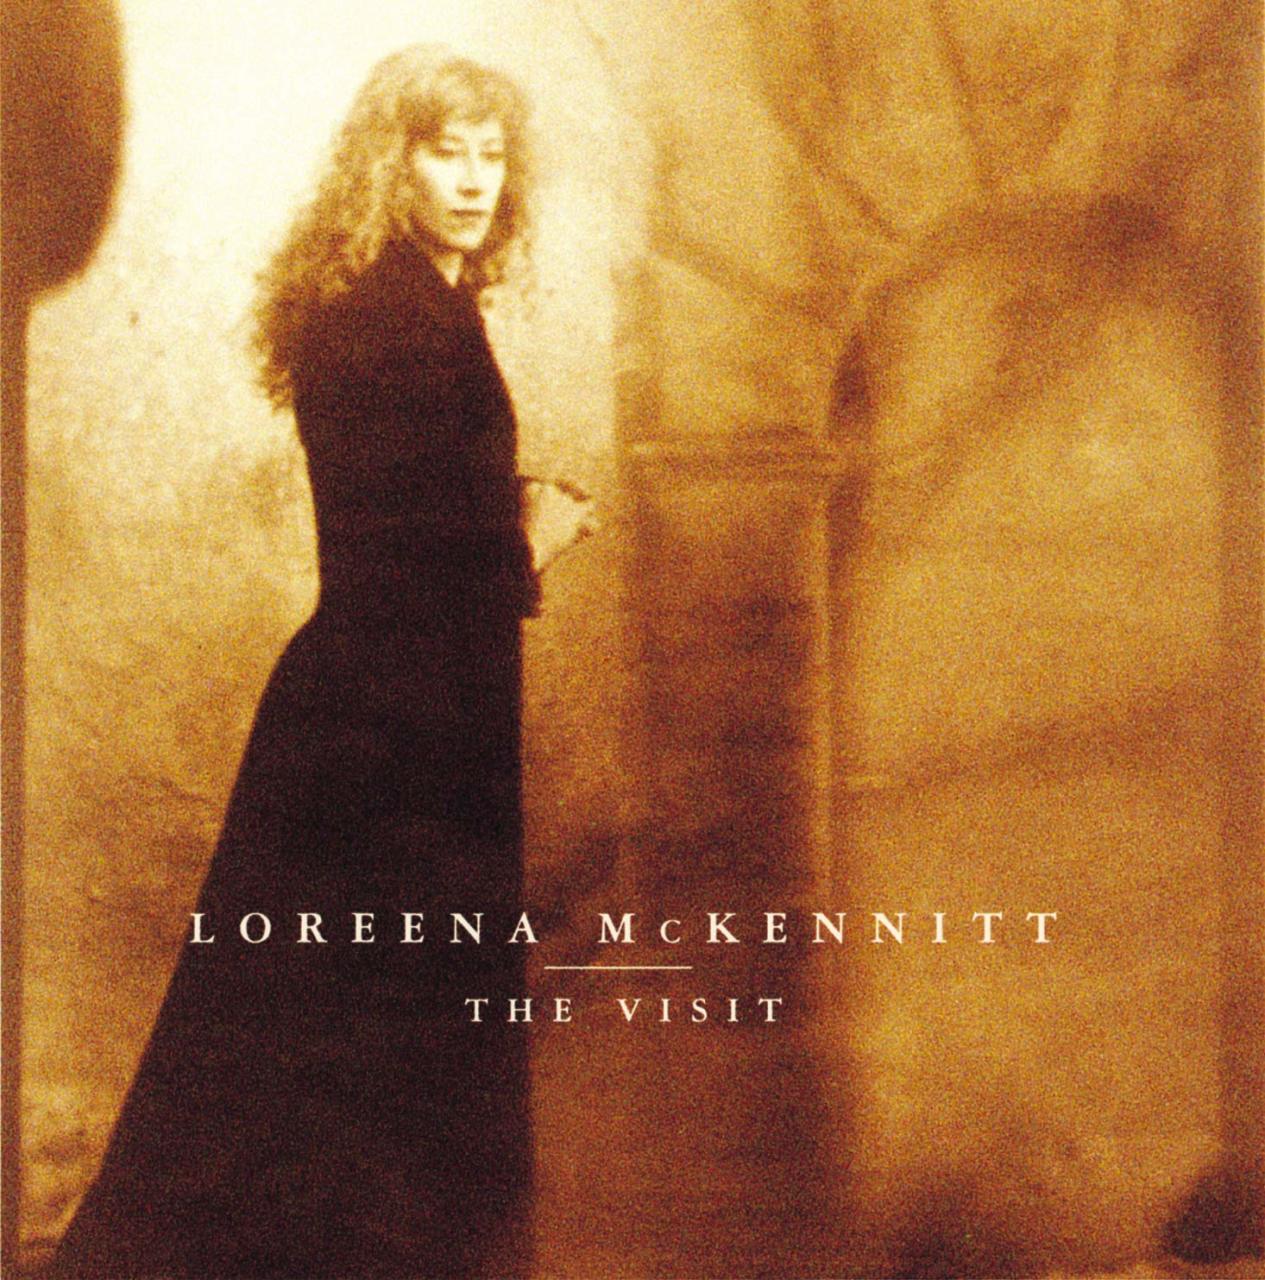 LOREENA McKENNITT - THE VISIT (1991) - CD 2008 EDITION SIFIR